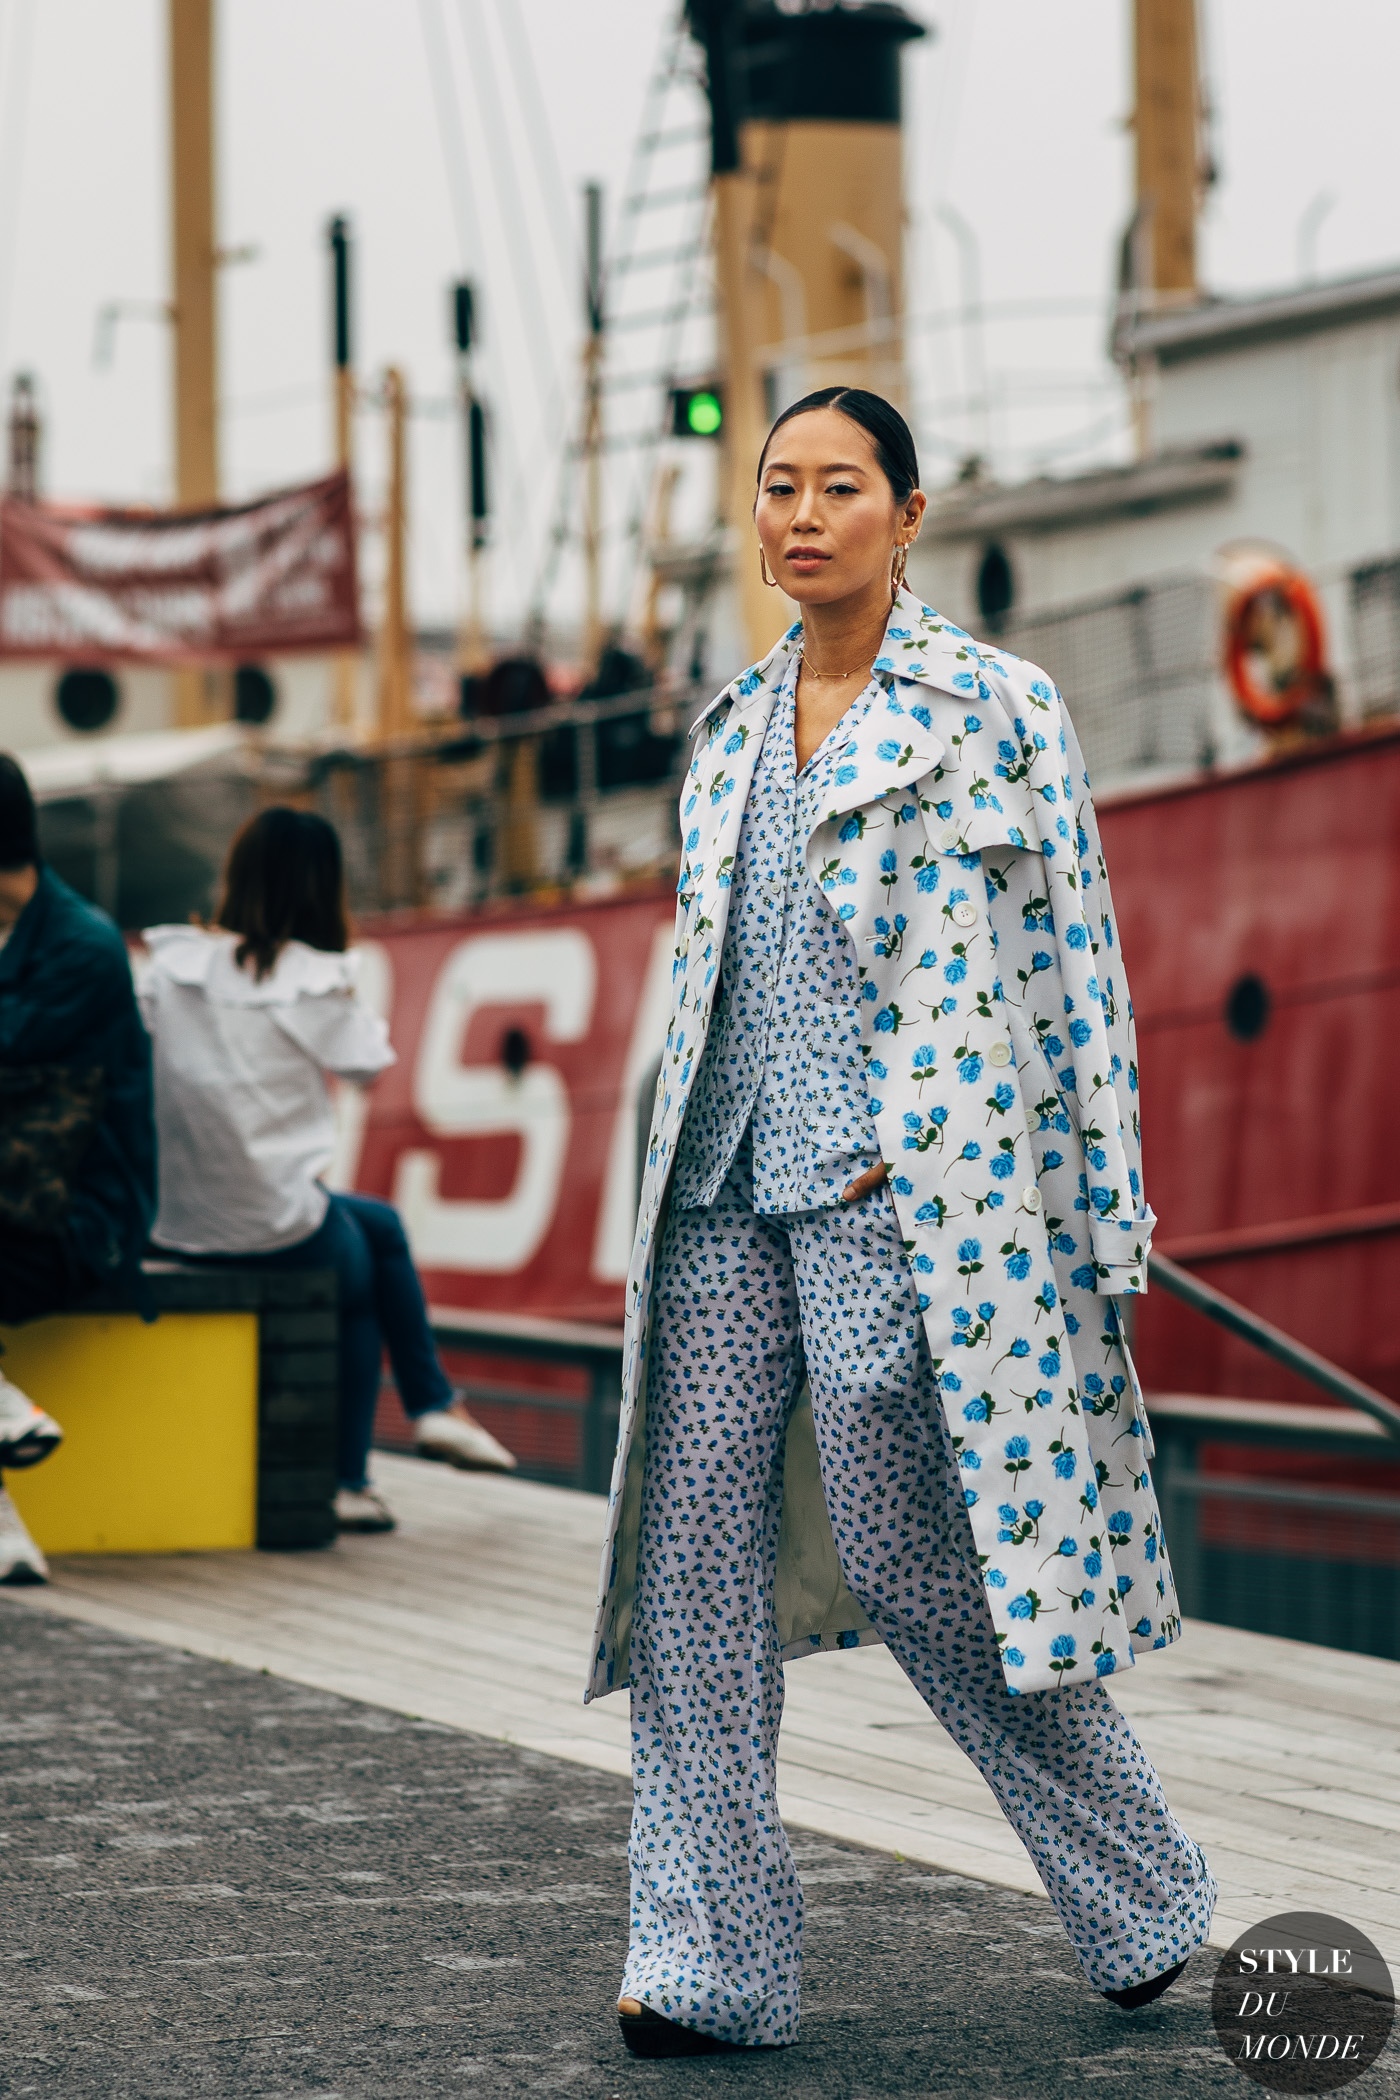 New York SS 2019 Street Style: Aimee Song - STYLE DU MONDE 